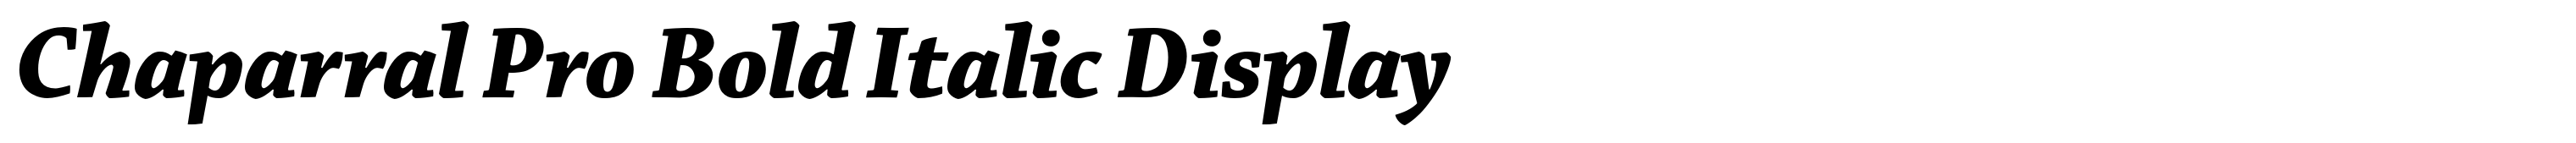 Chaparral Pro Bold Italic Display